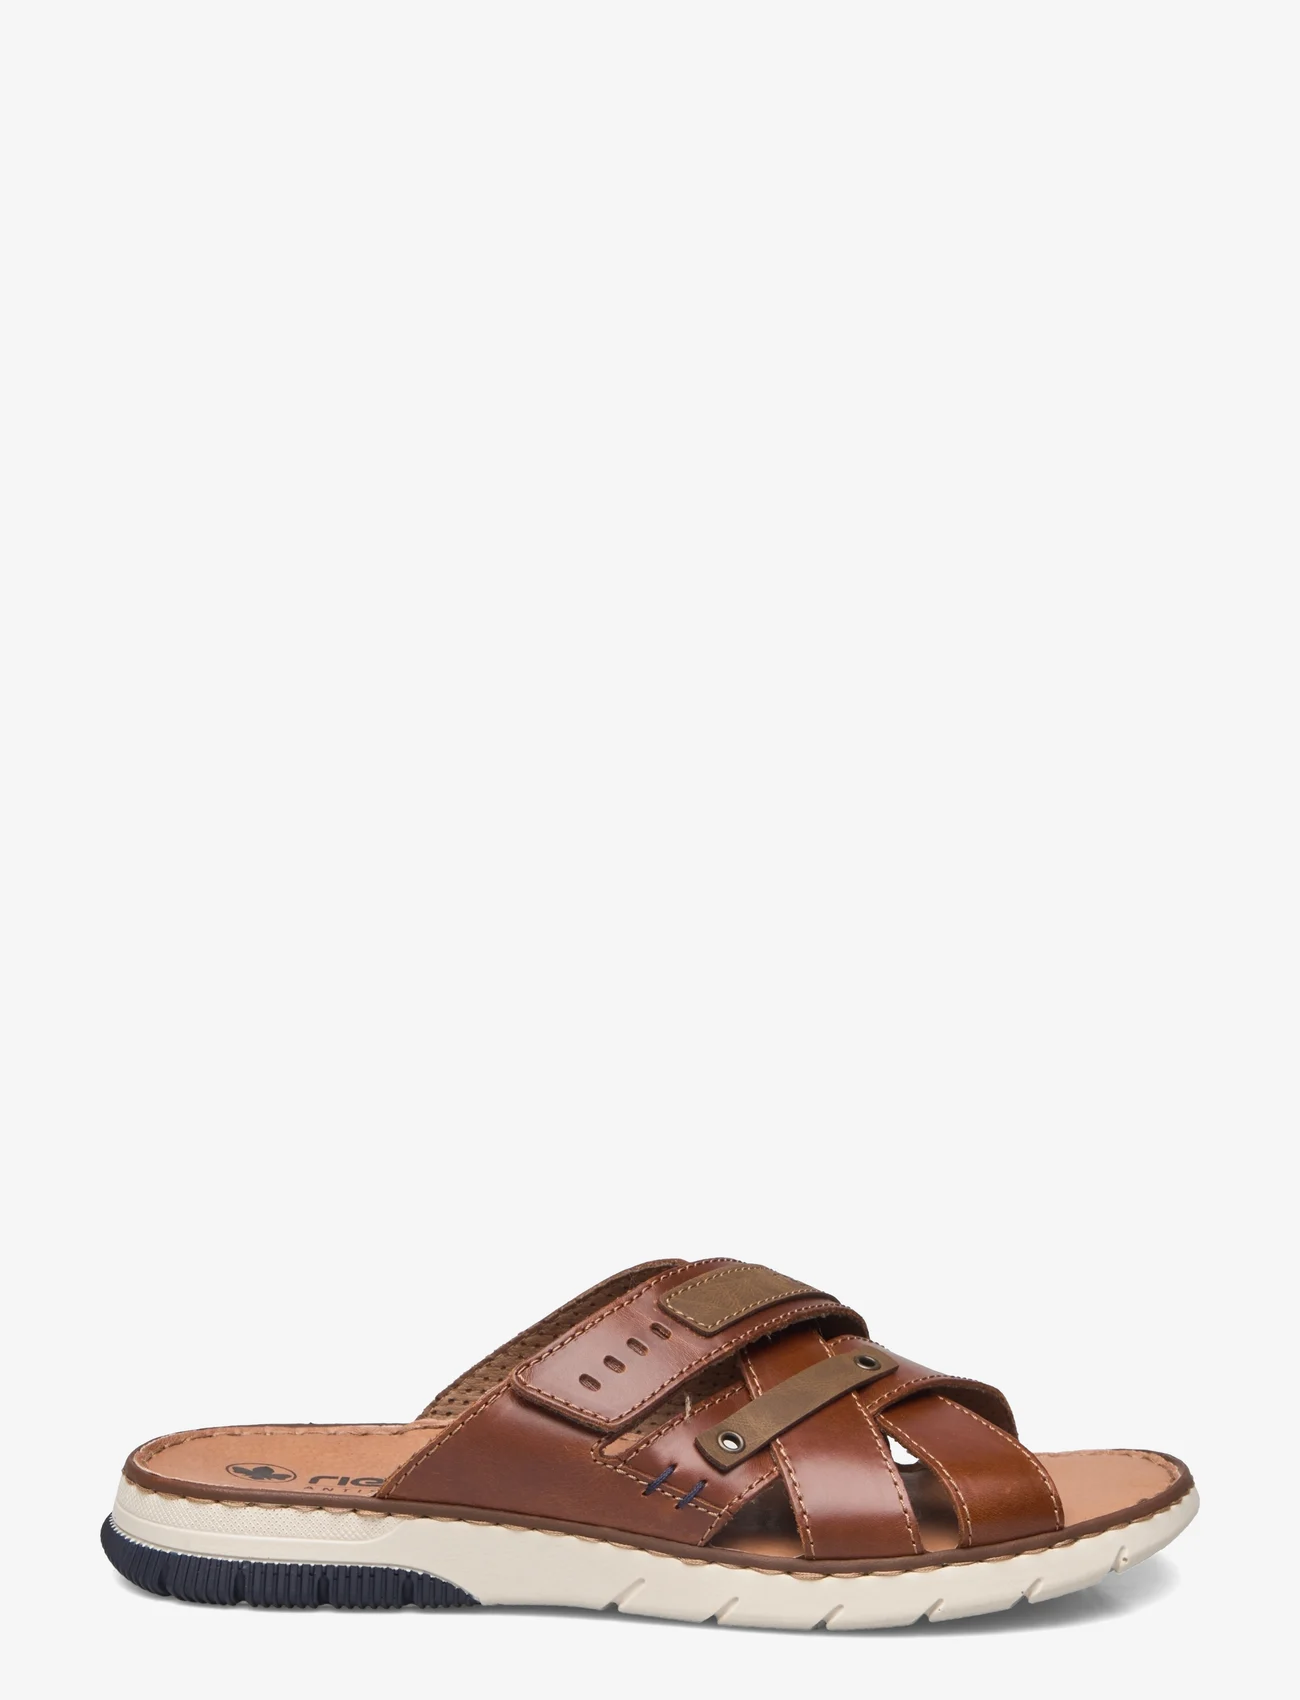 Rieker - 25292-24 - sandals - brown - 1